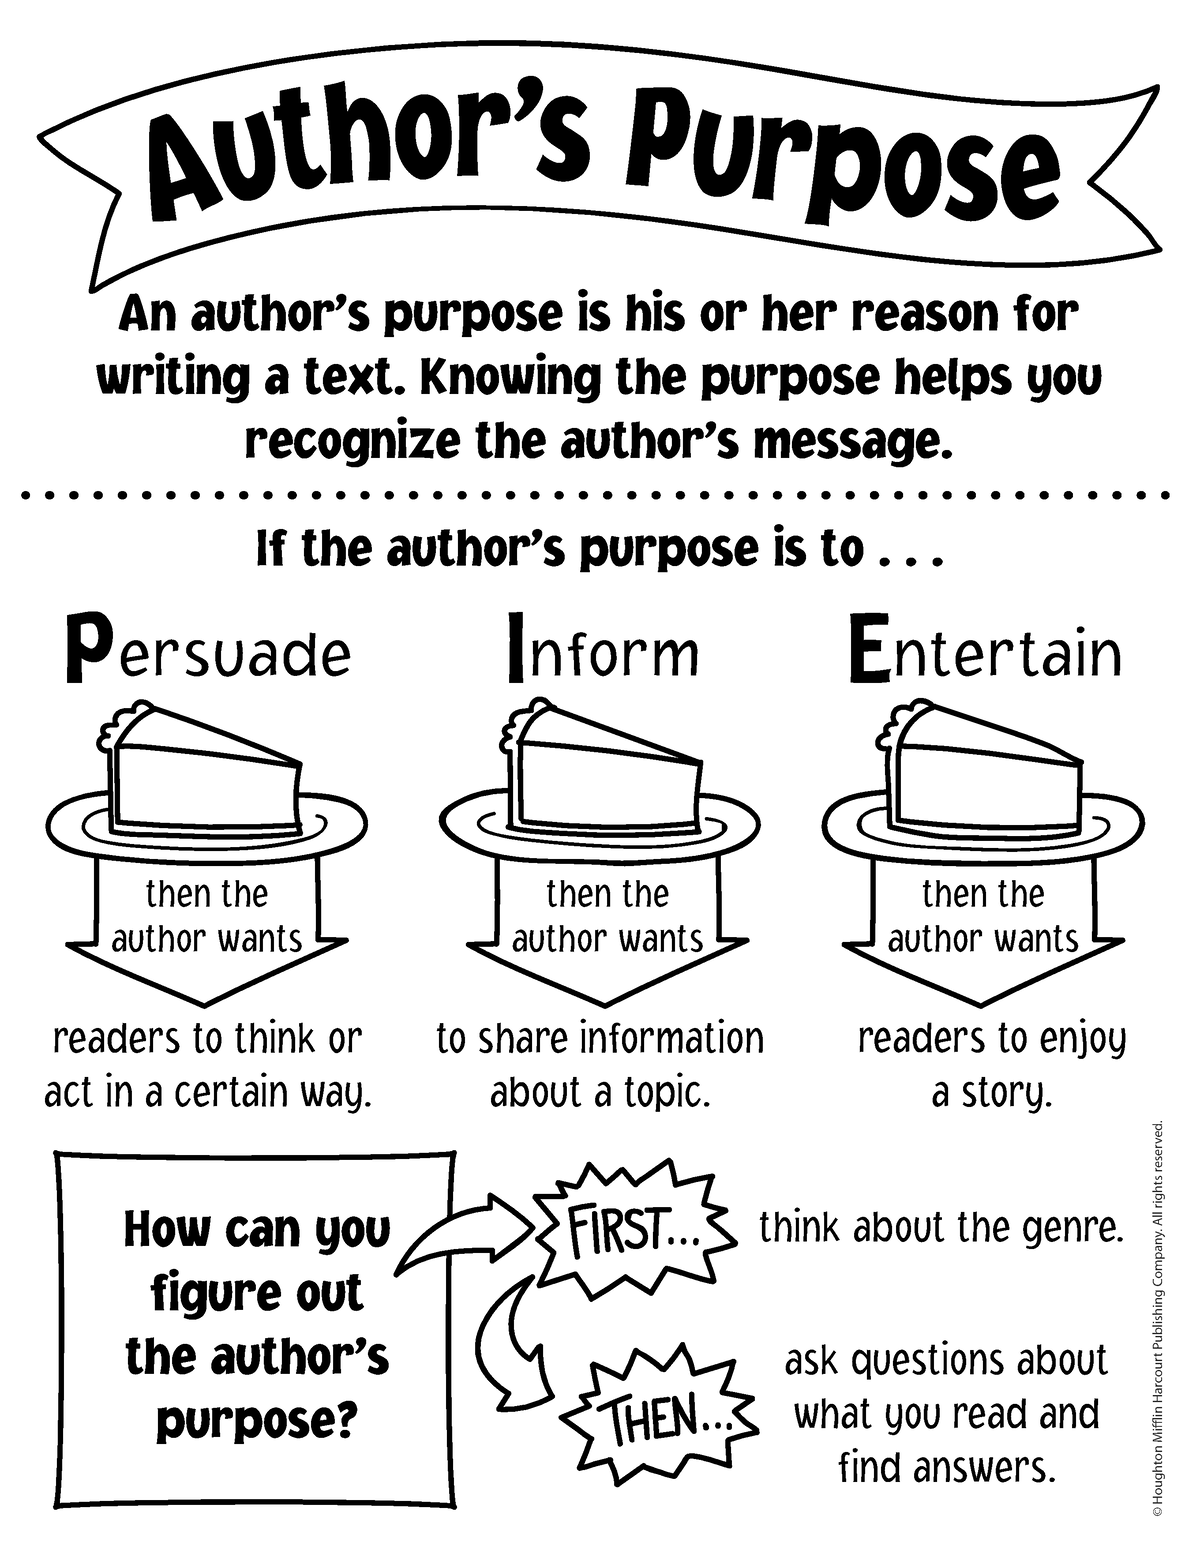 Author's Purpose - Mrs. GleasonSixth Grade English Language